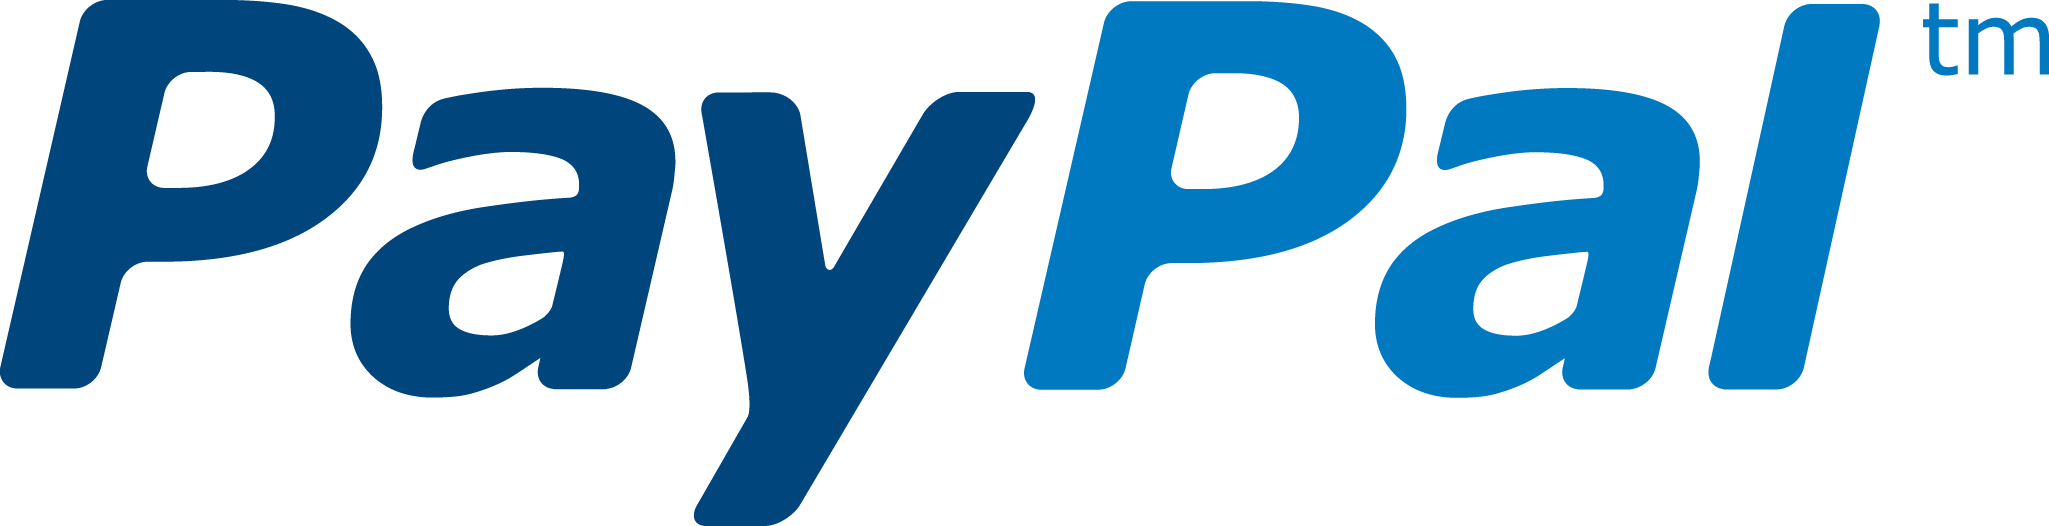 paypal logo vector download